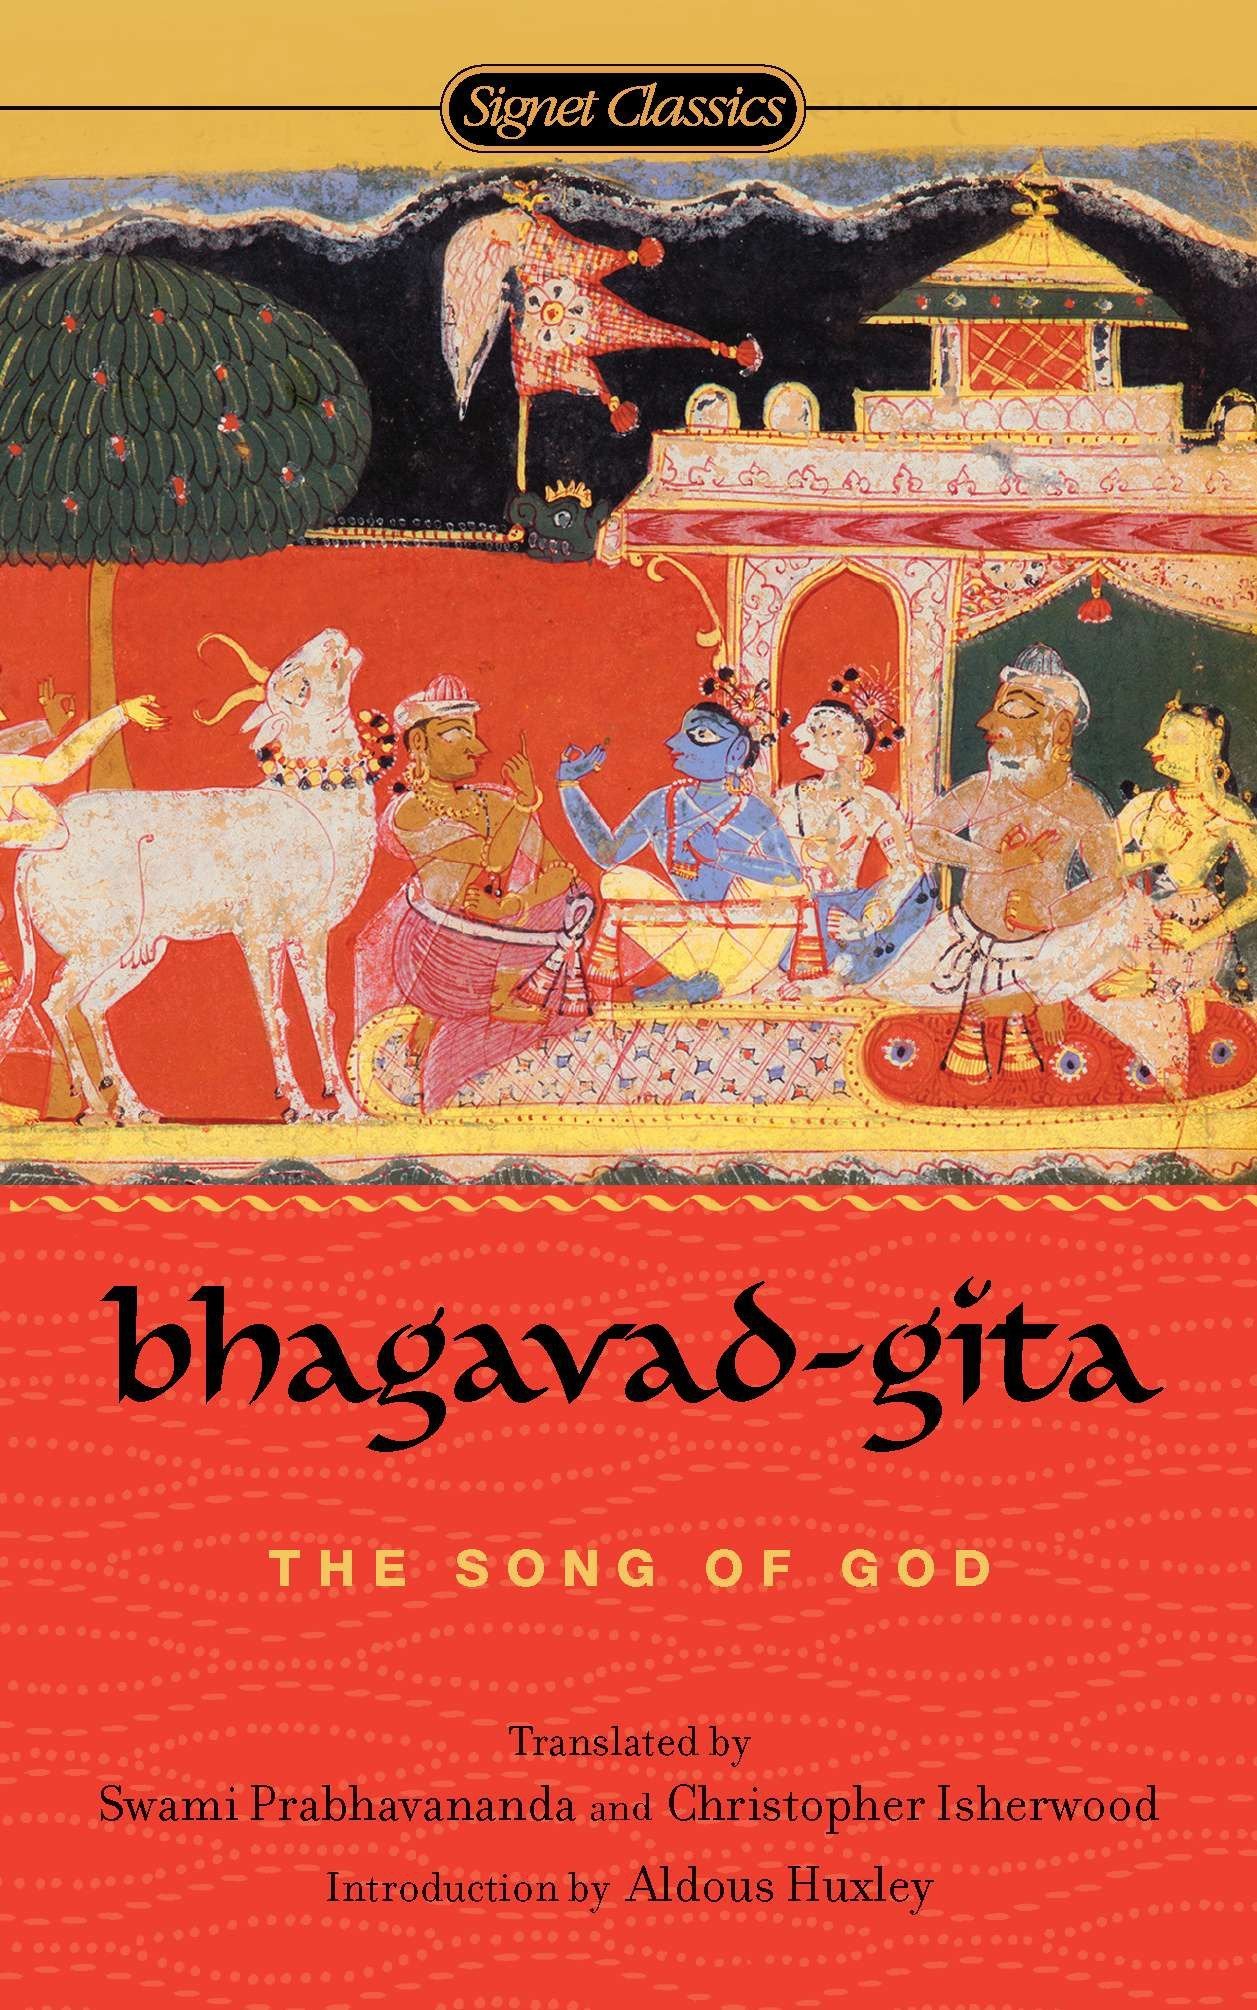 The Song of god - the bhagavad gita